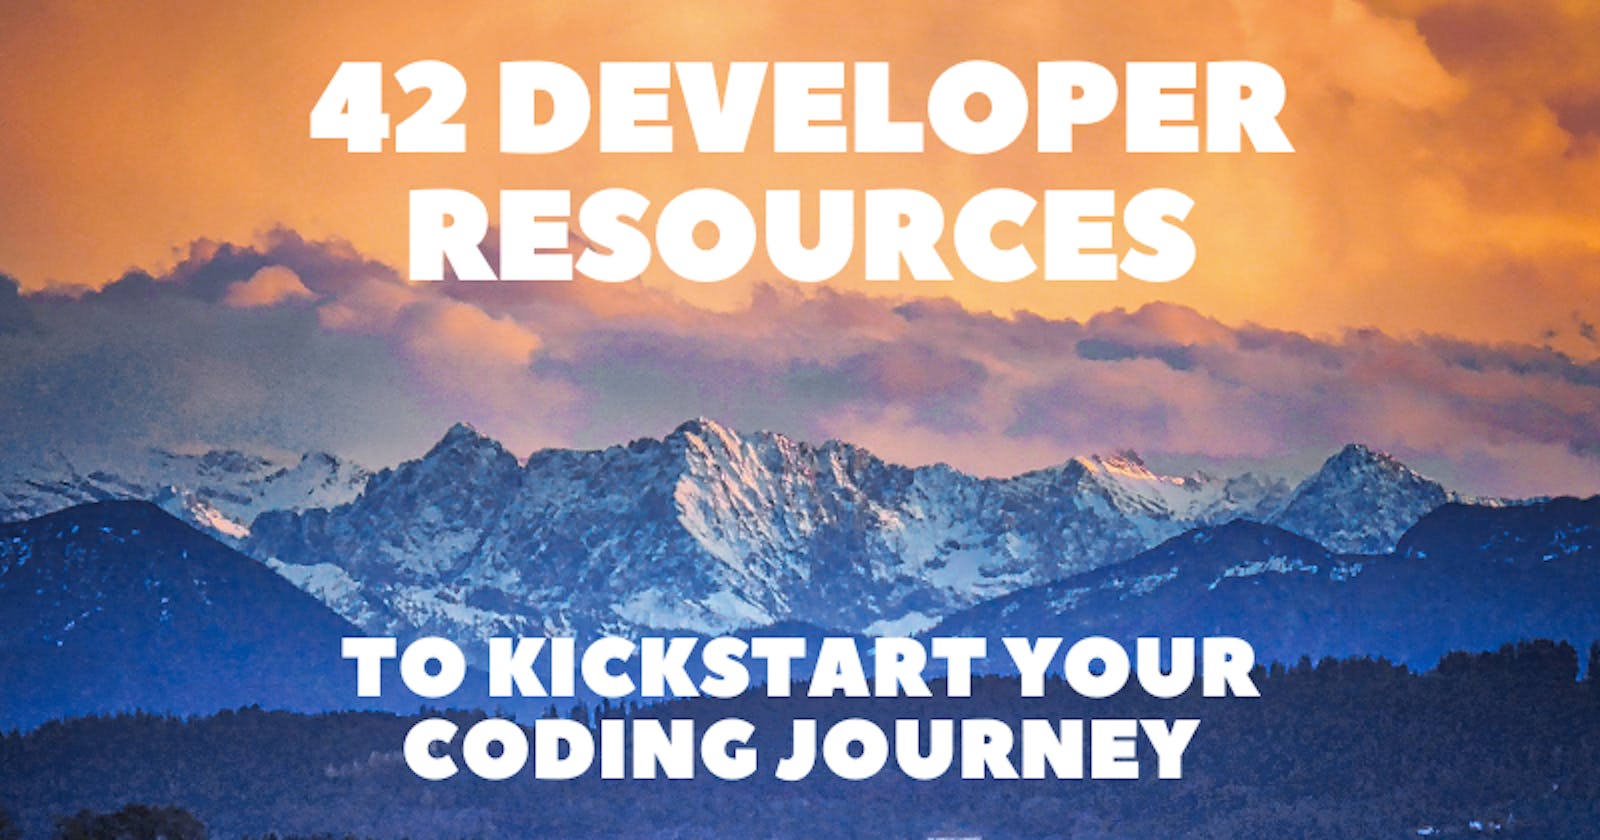 42 Developer Resources to Kickstart Your Coding Journey 🚀🔥